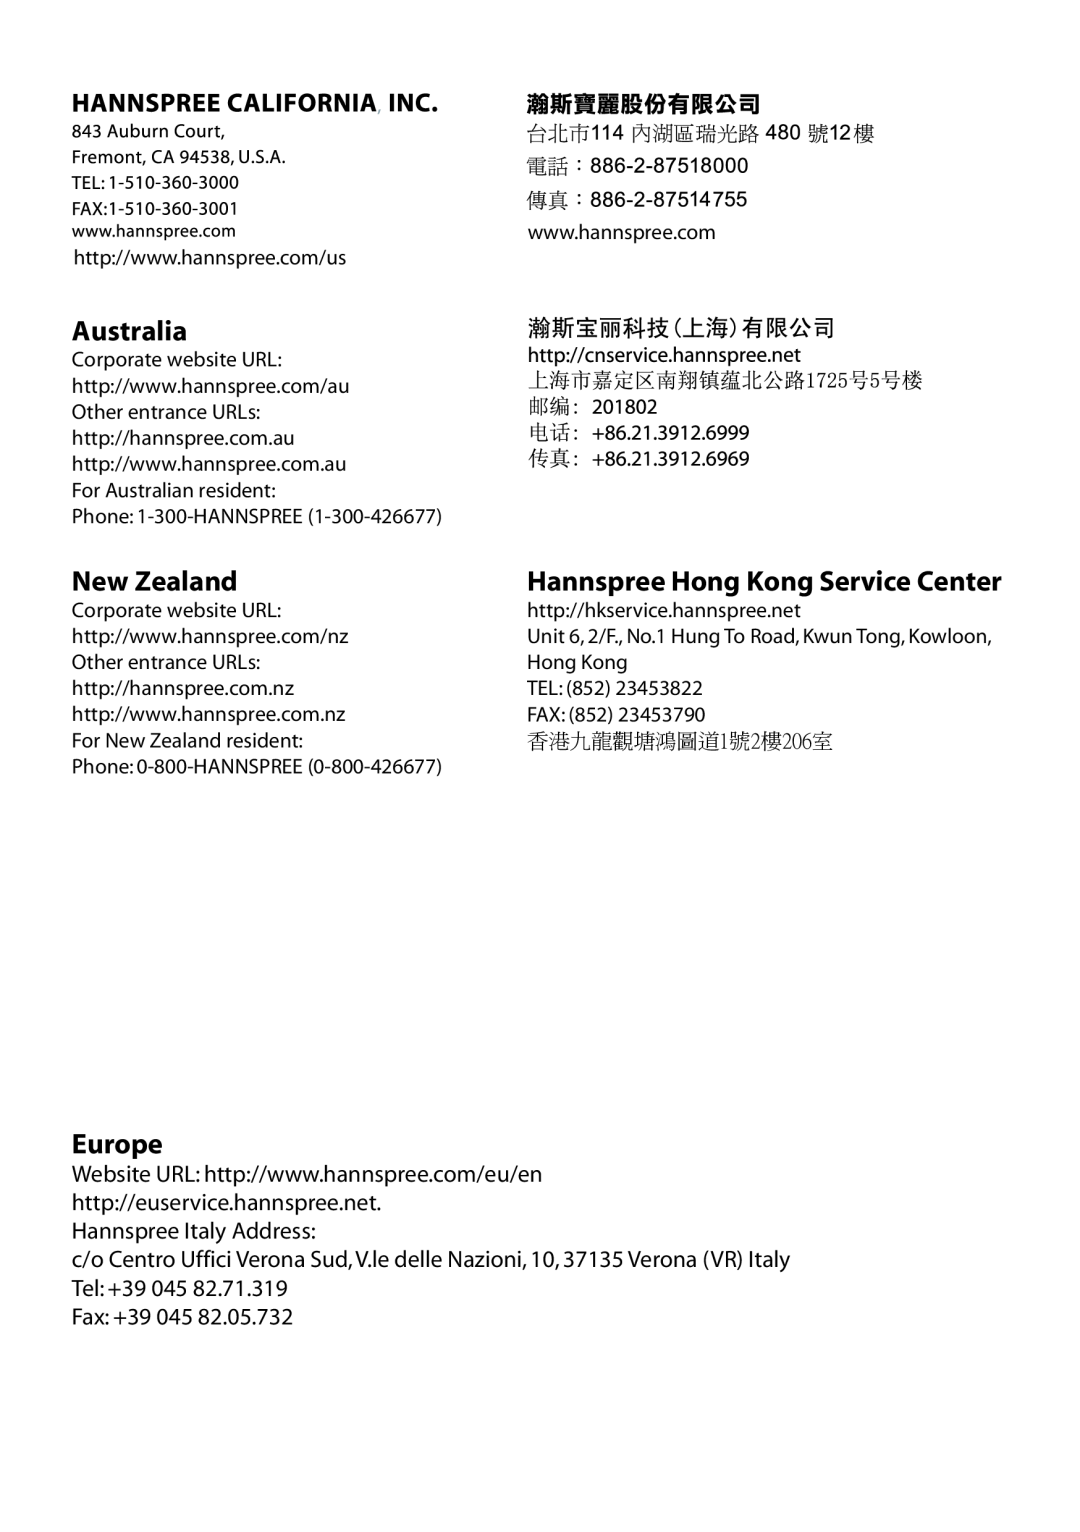 HANNspree MAK-000039 manual Australia, New Zealand, Europe, Hannspree Hong Kong Service Center, Hannspree Italy Address 